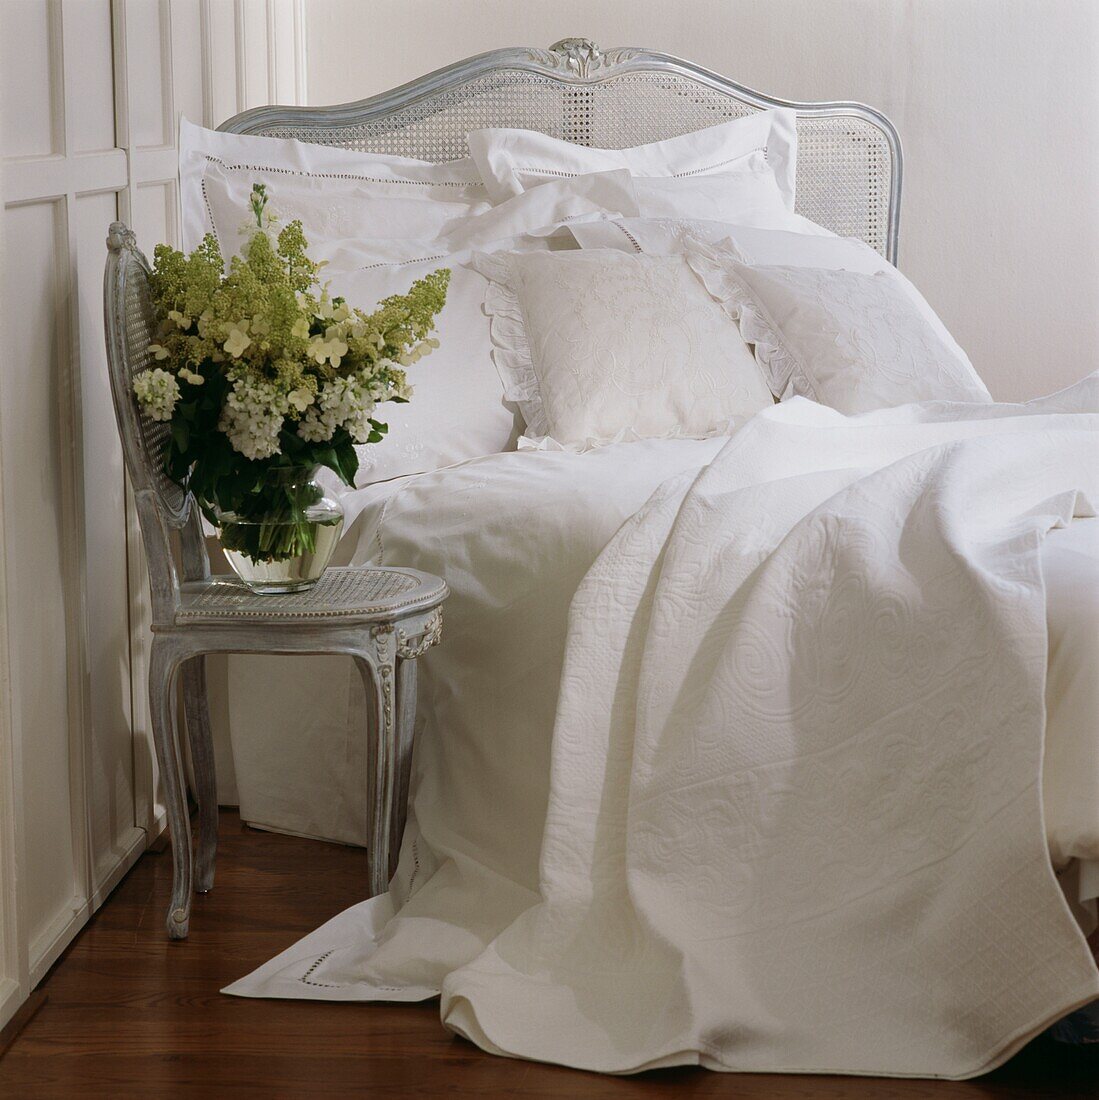 Flower arrangement on chair beside unmade bed